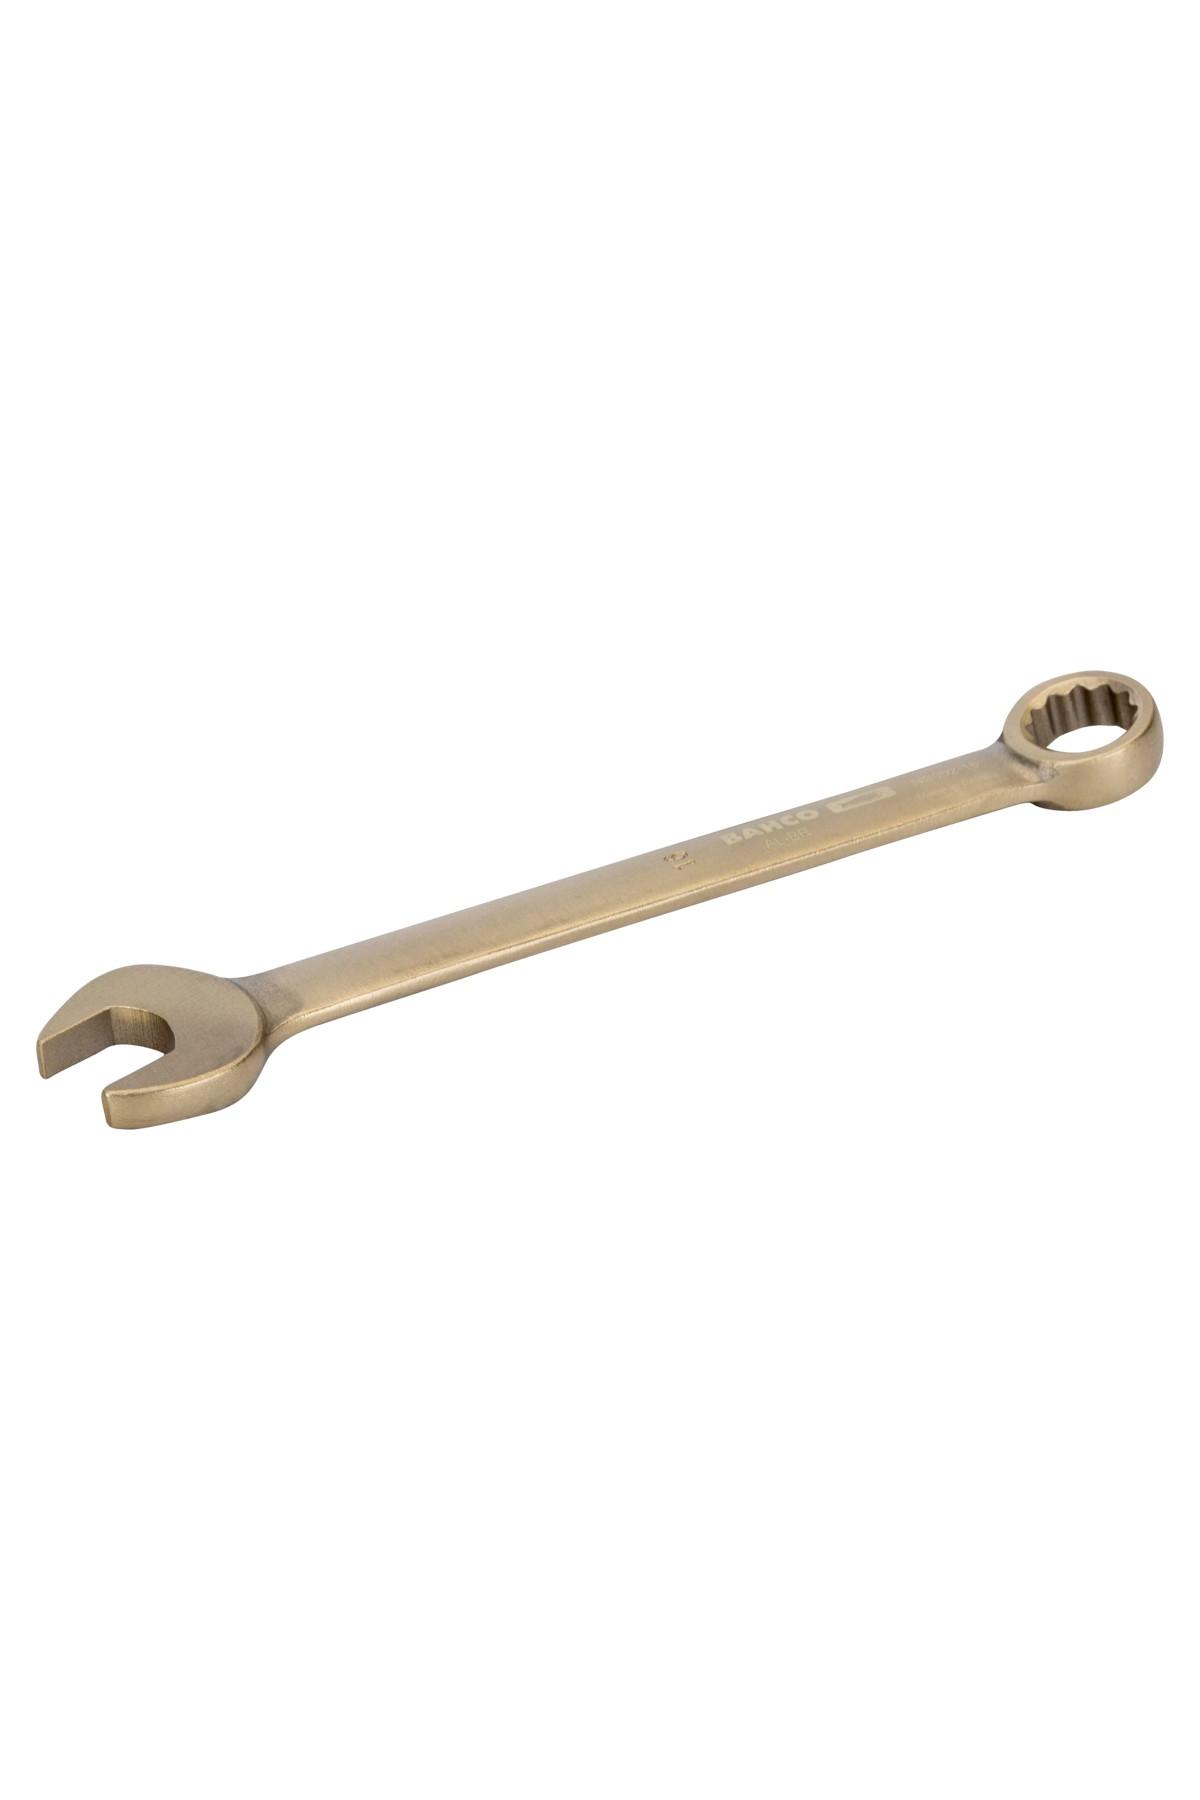 Gnistfri aluminium-bronze ringnøgle 11/32